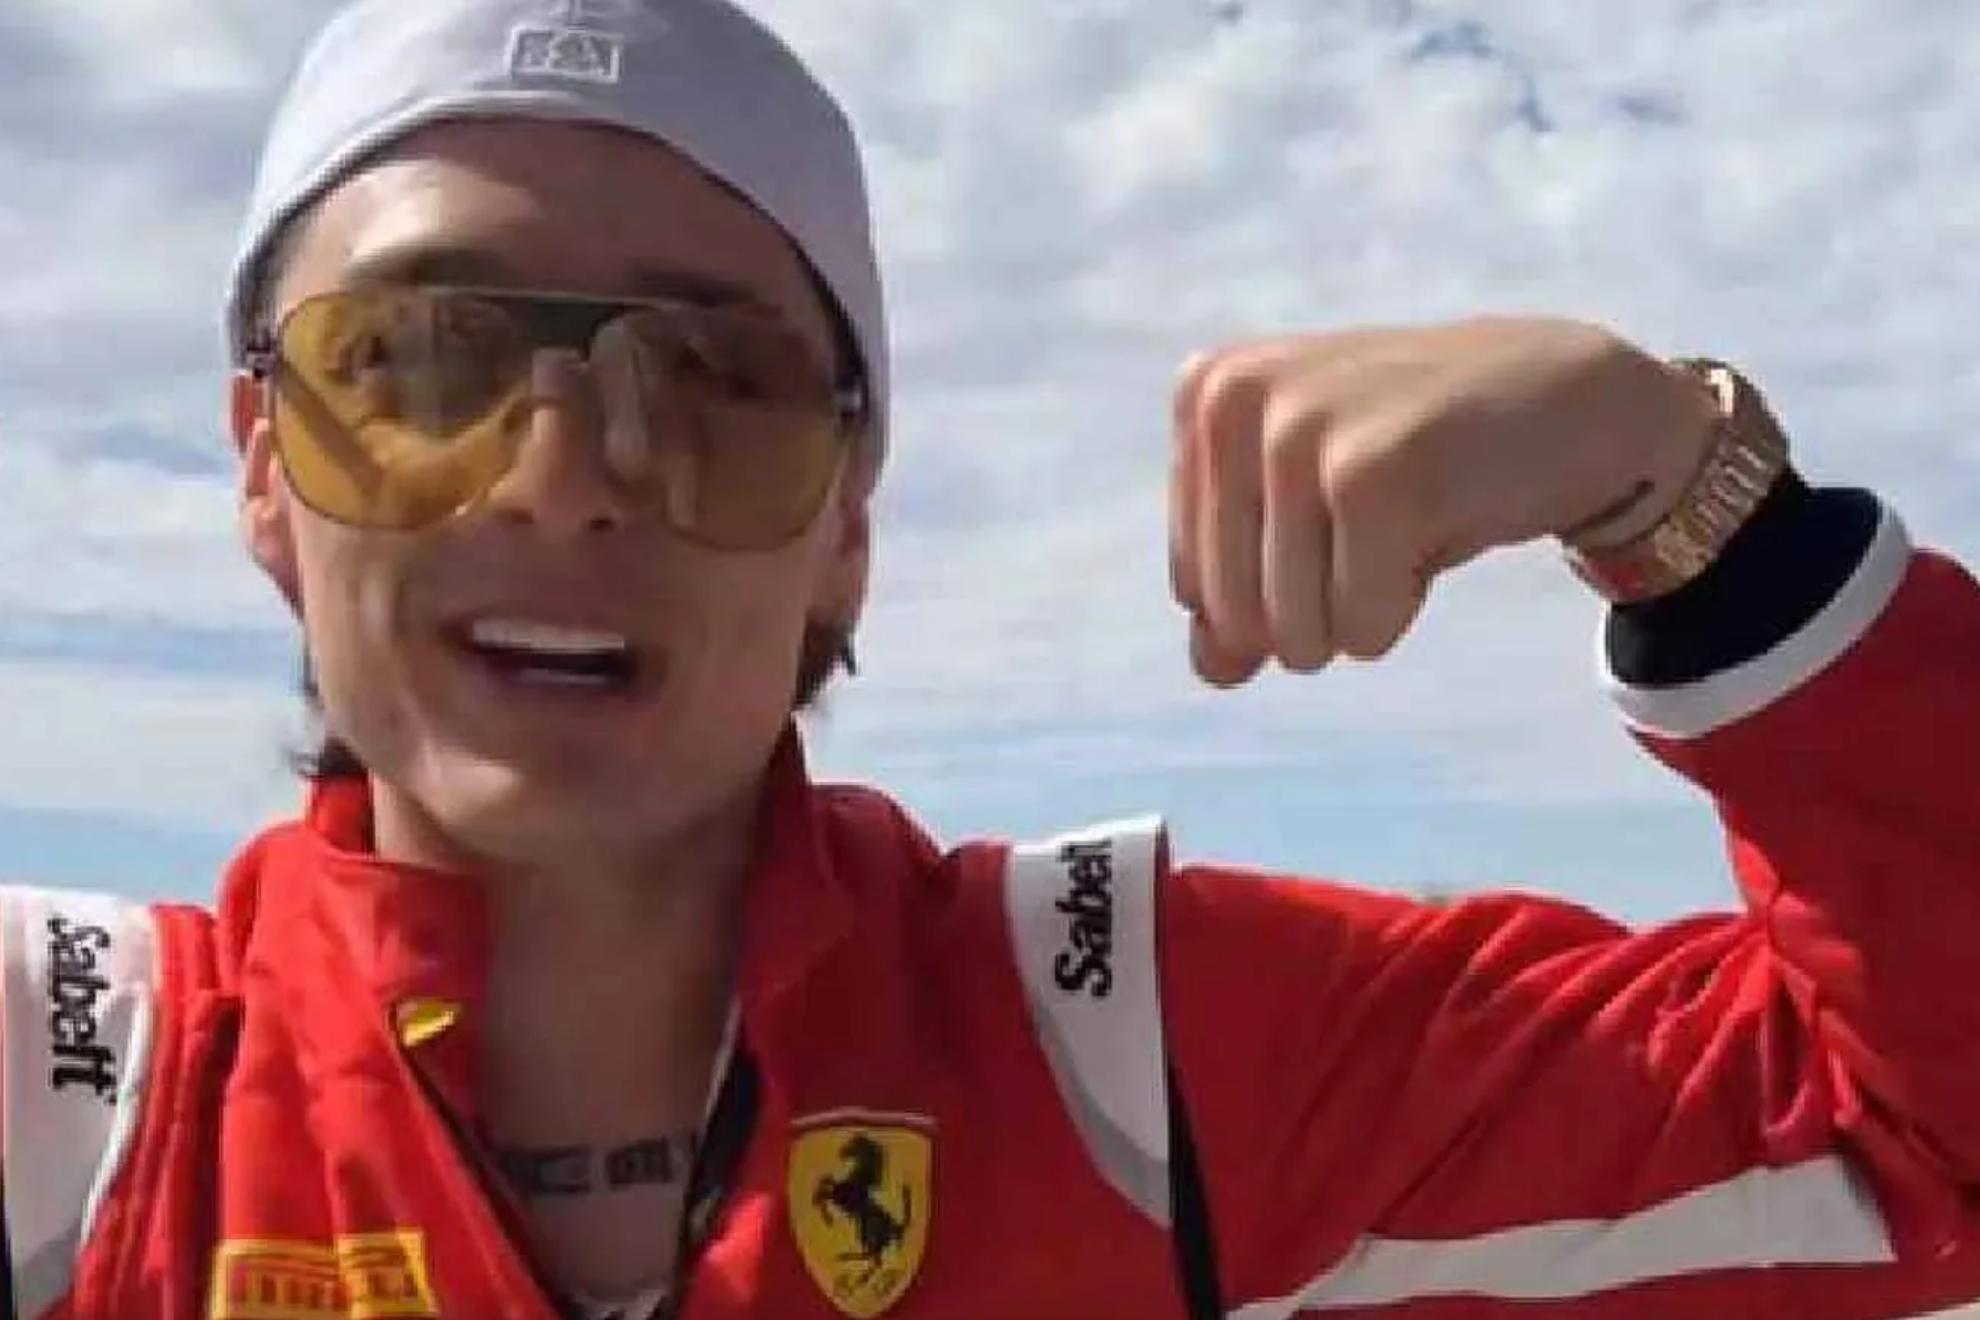 Peso Pluma says he wants to be Ferraris new Formula 1 driver